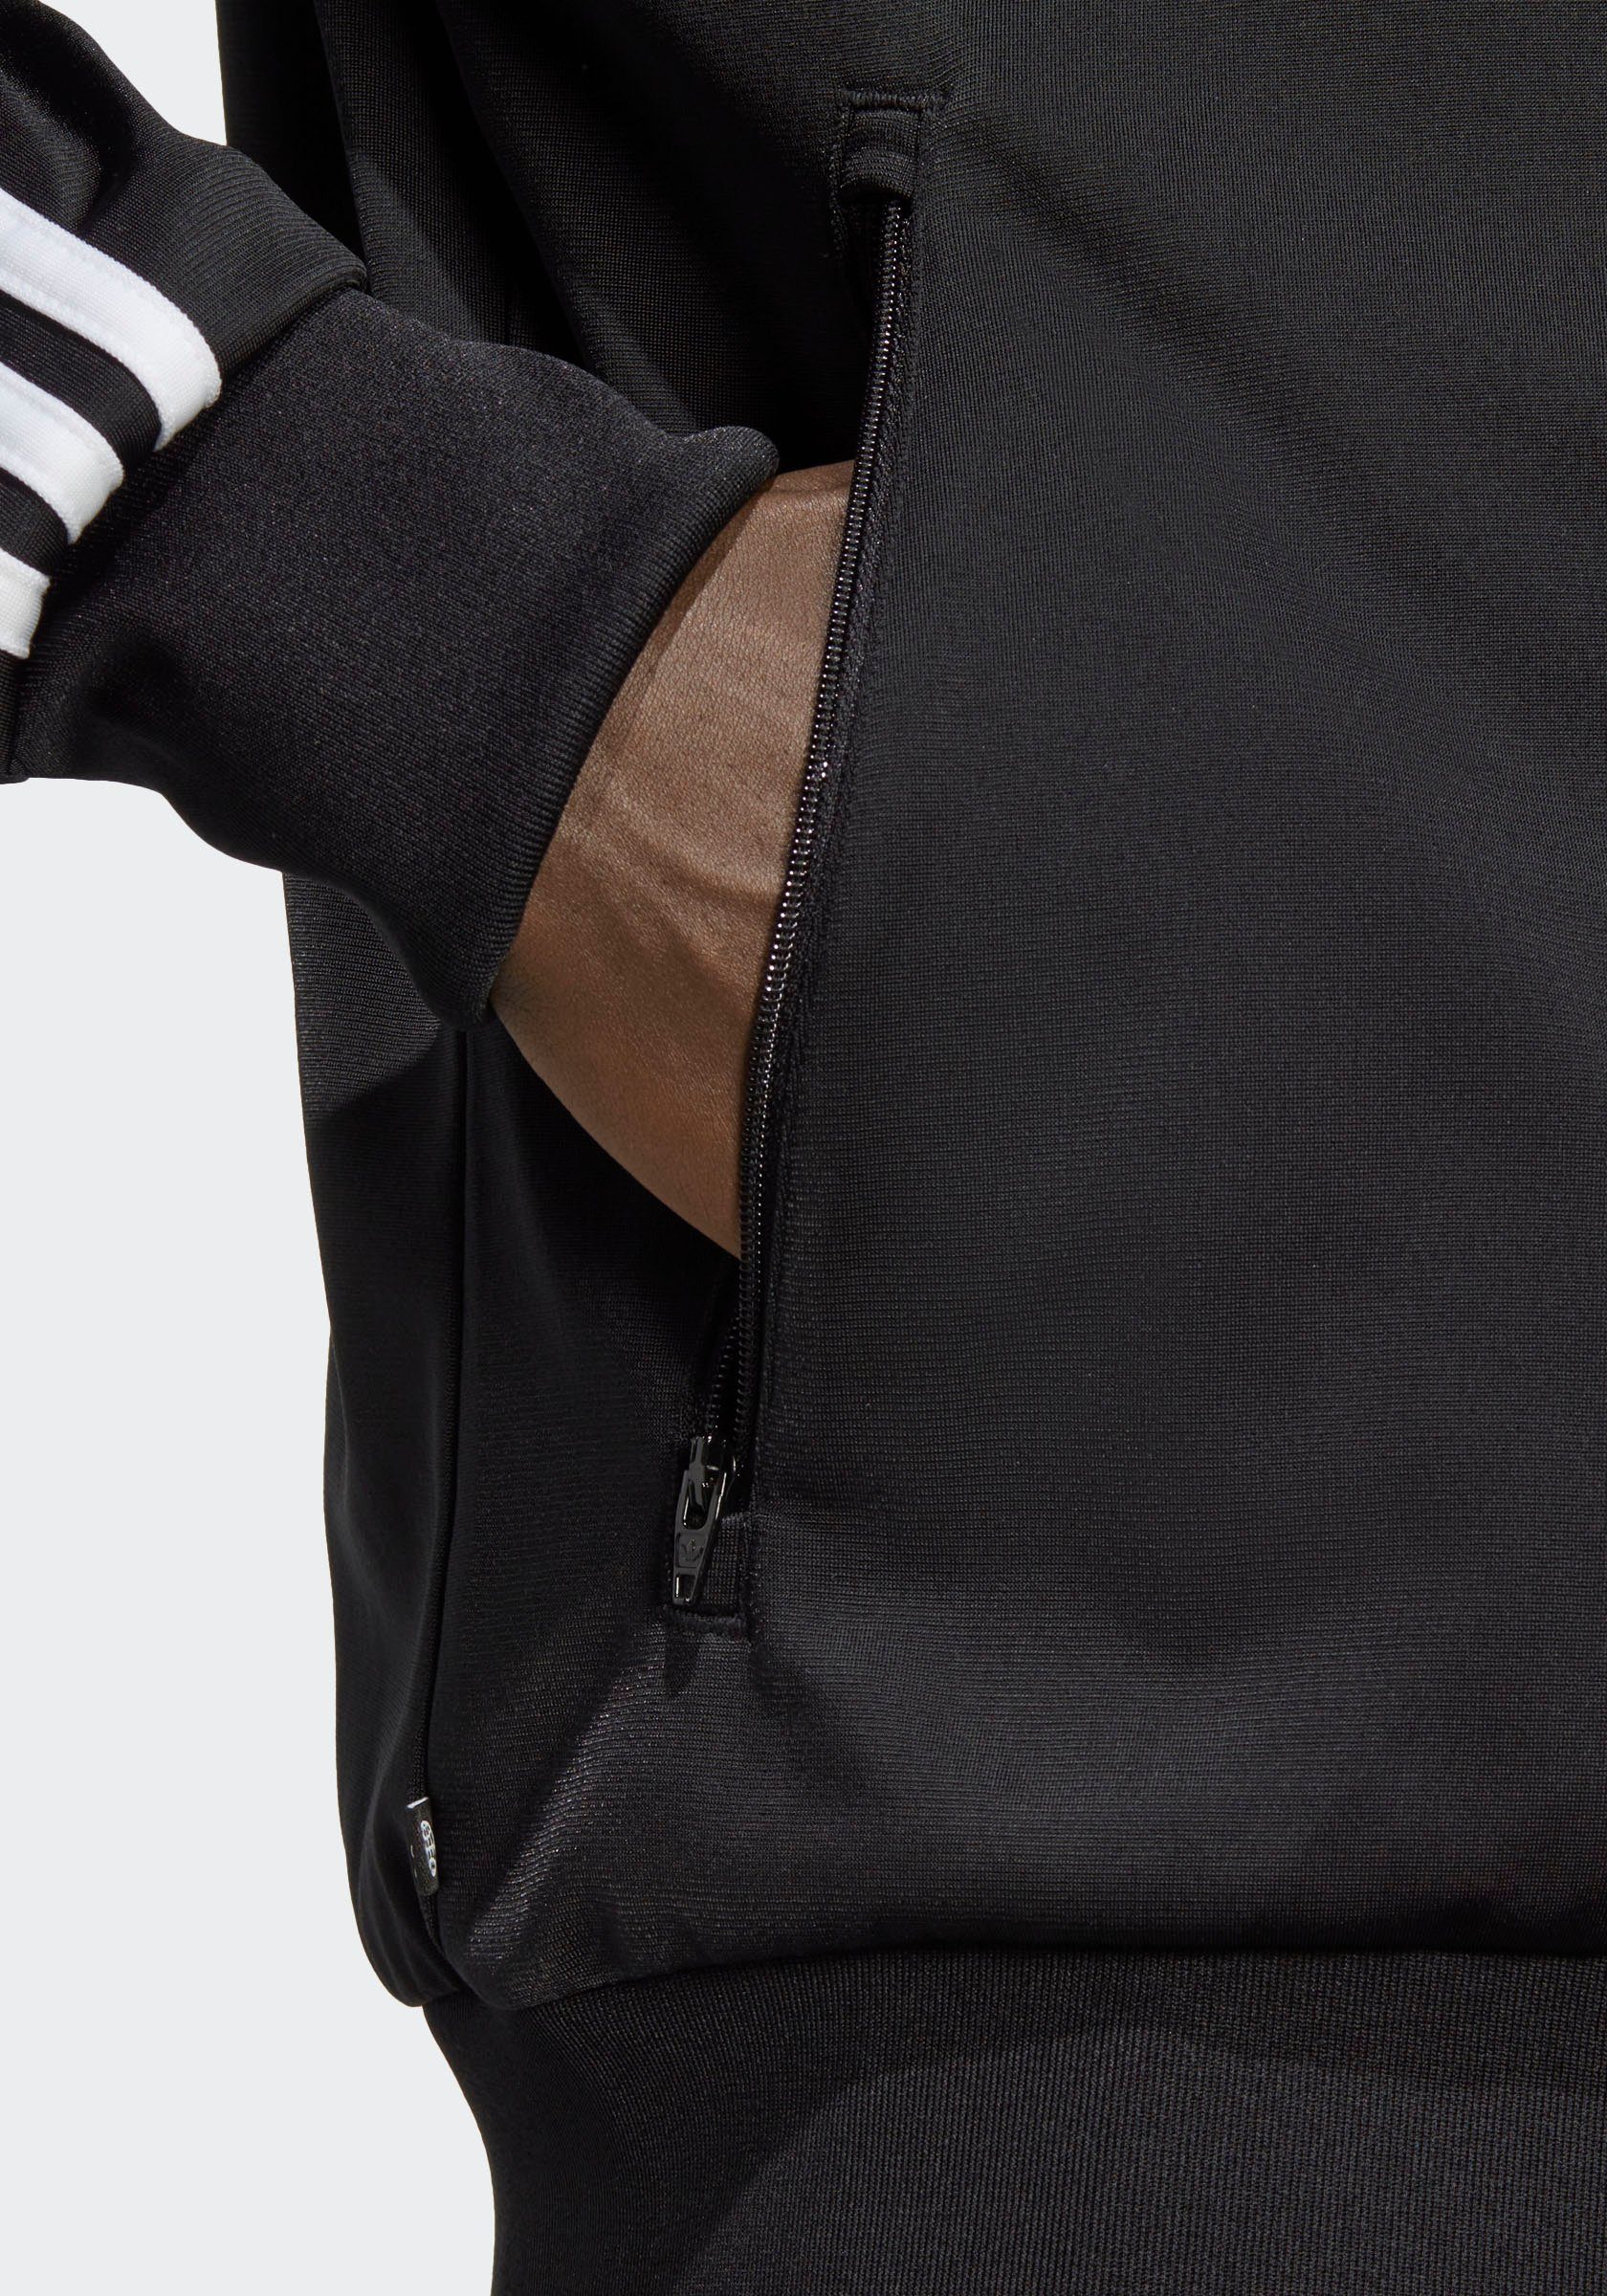 ORIGINALS FIREBIRD Originals Black ADICOLOR Trainingsjacke CLASSICS adidas